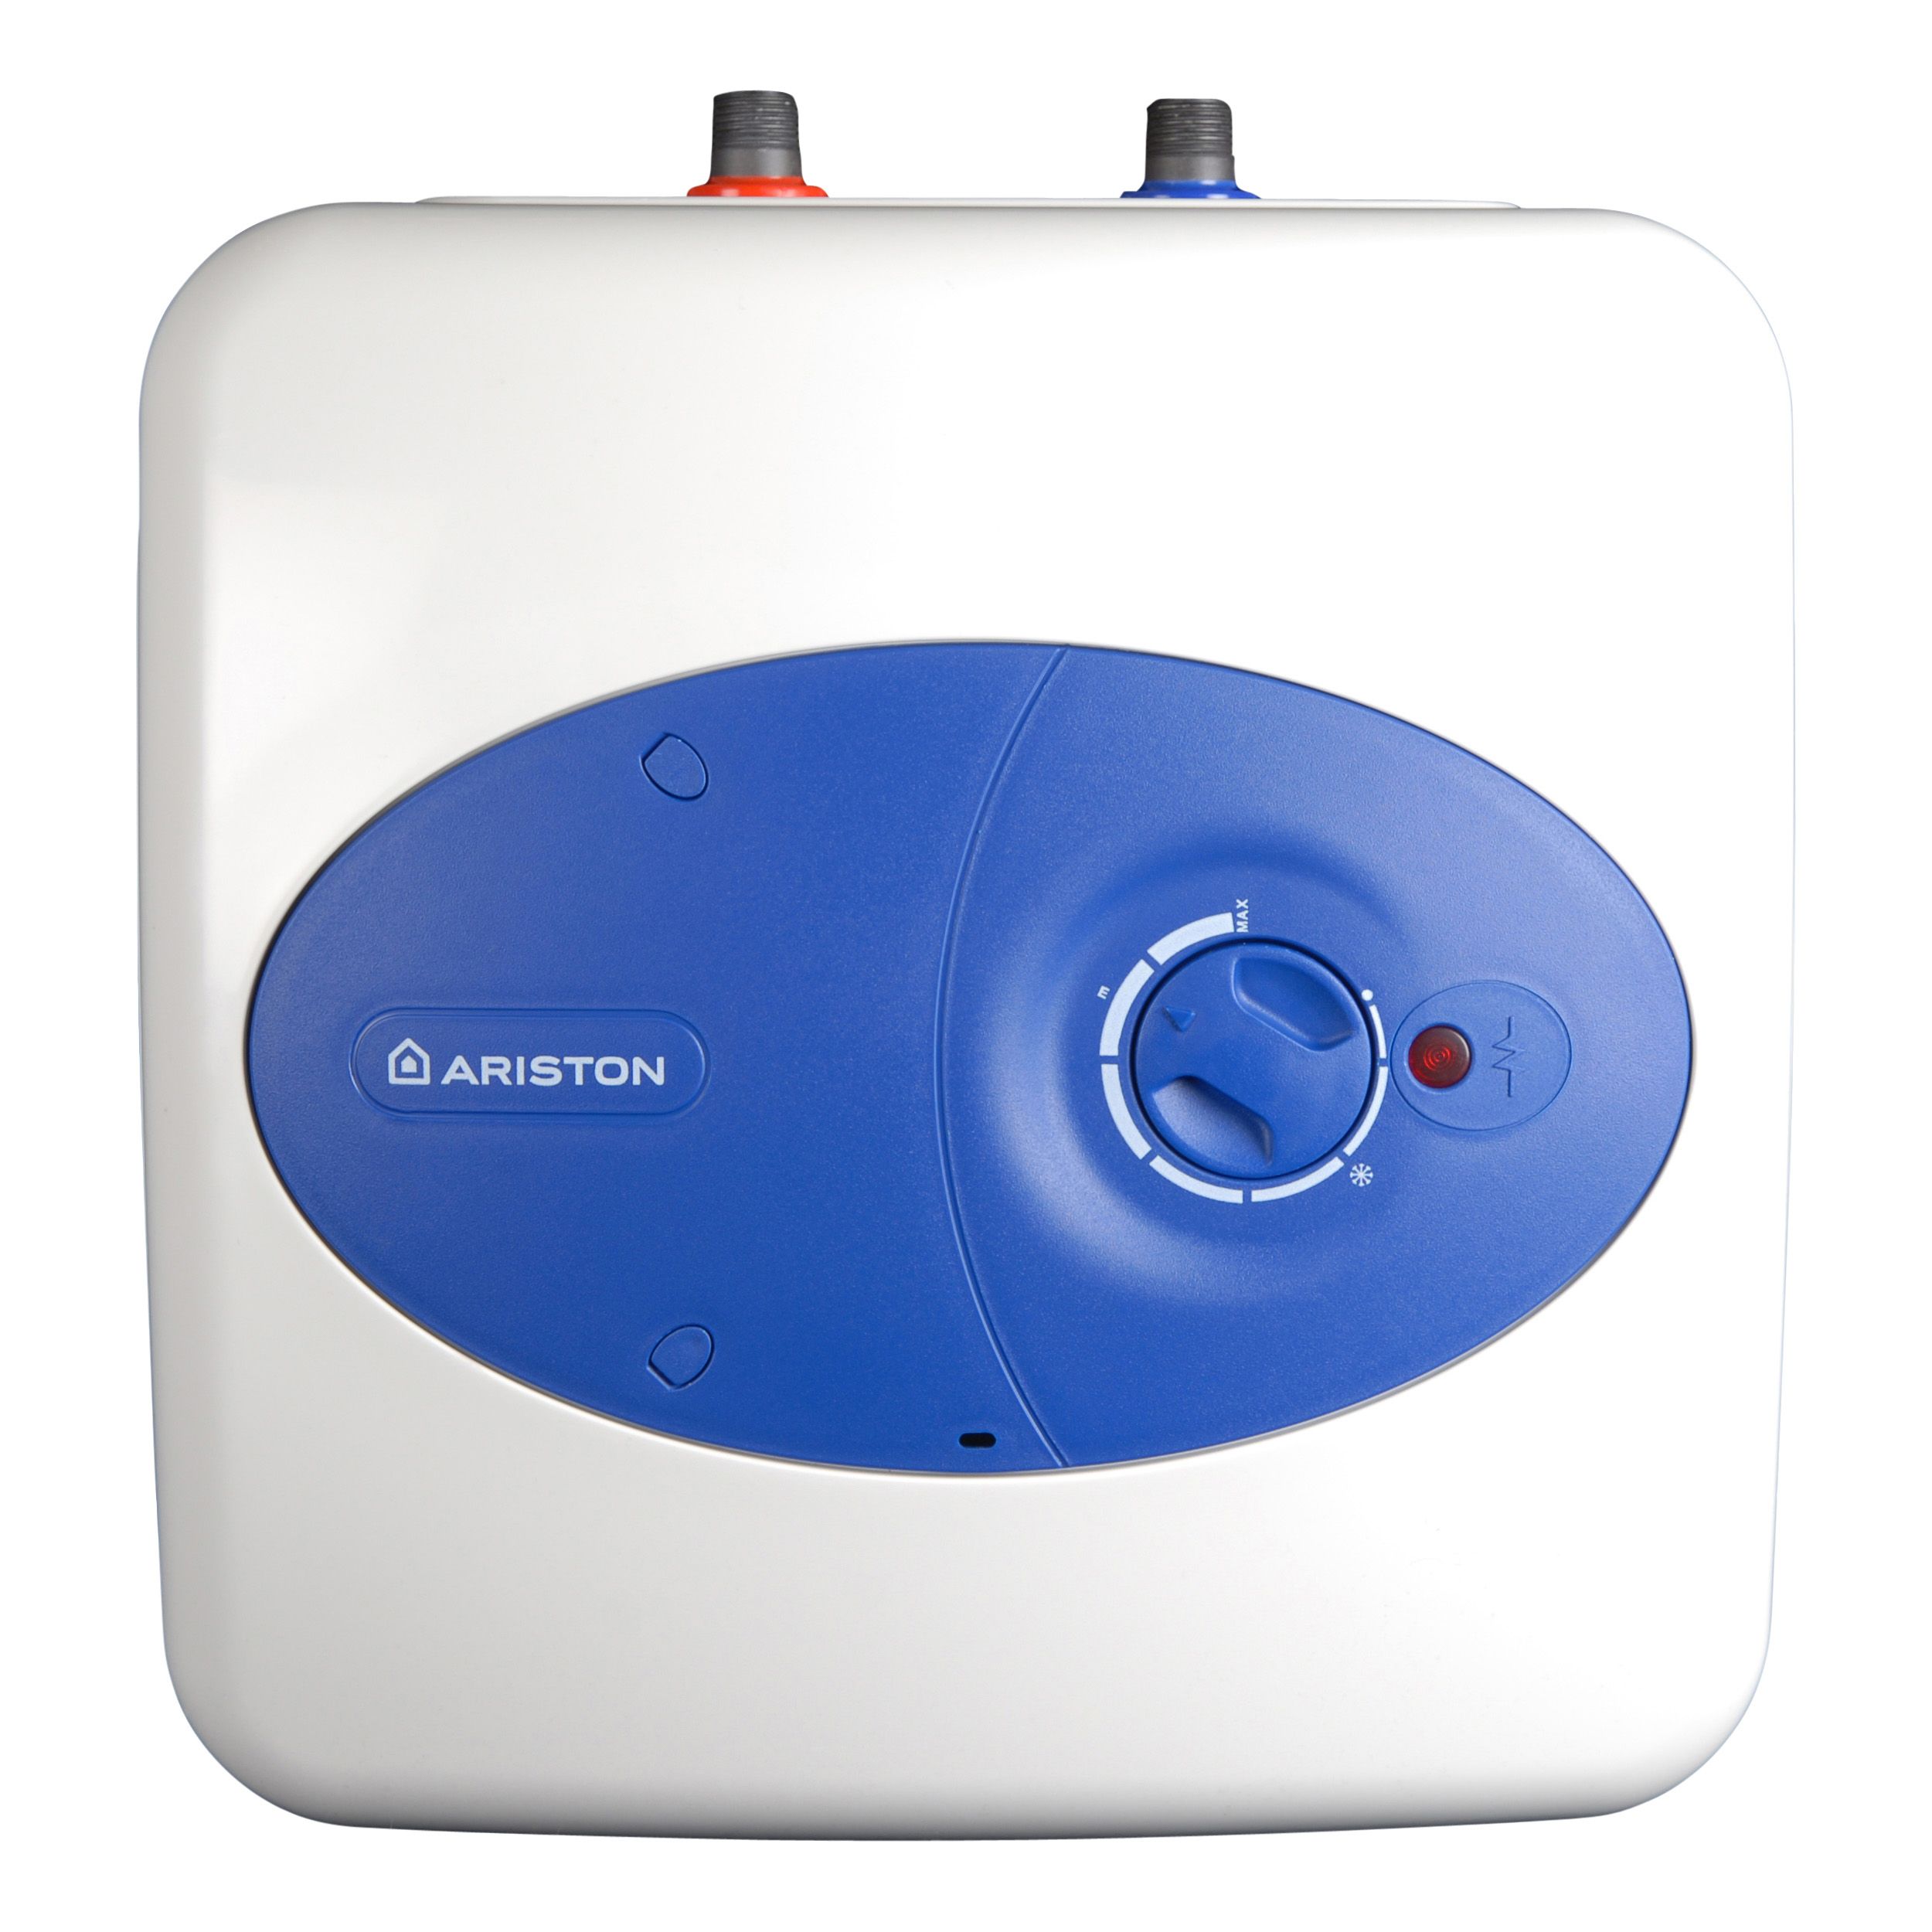 Ariston Europrisma Internal Electric Water Heater 2 Kw, 15000 Ml